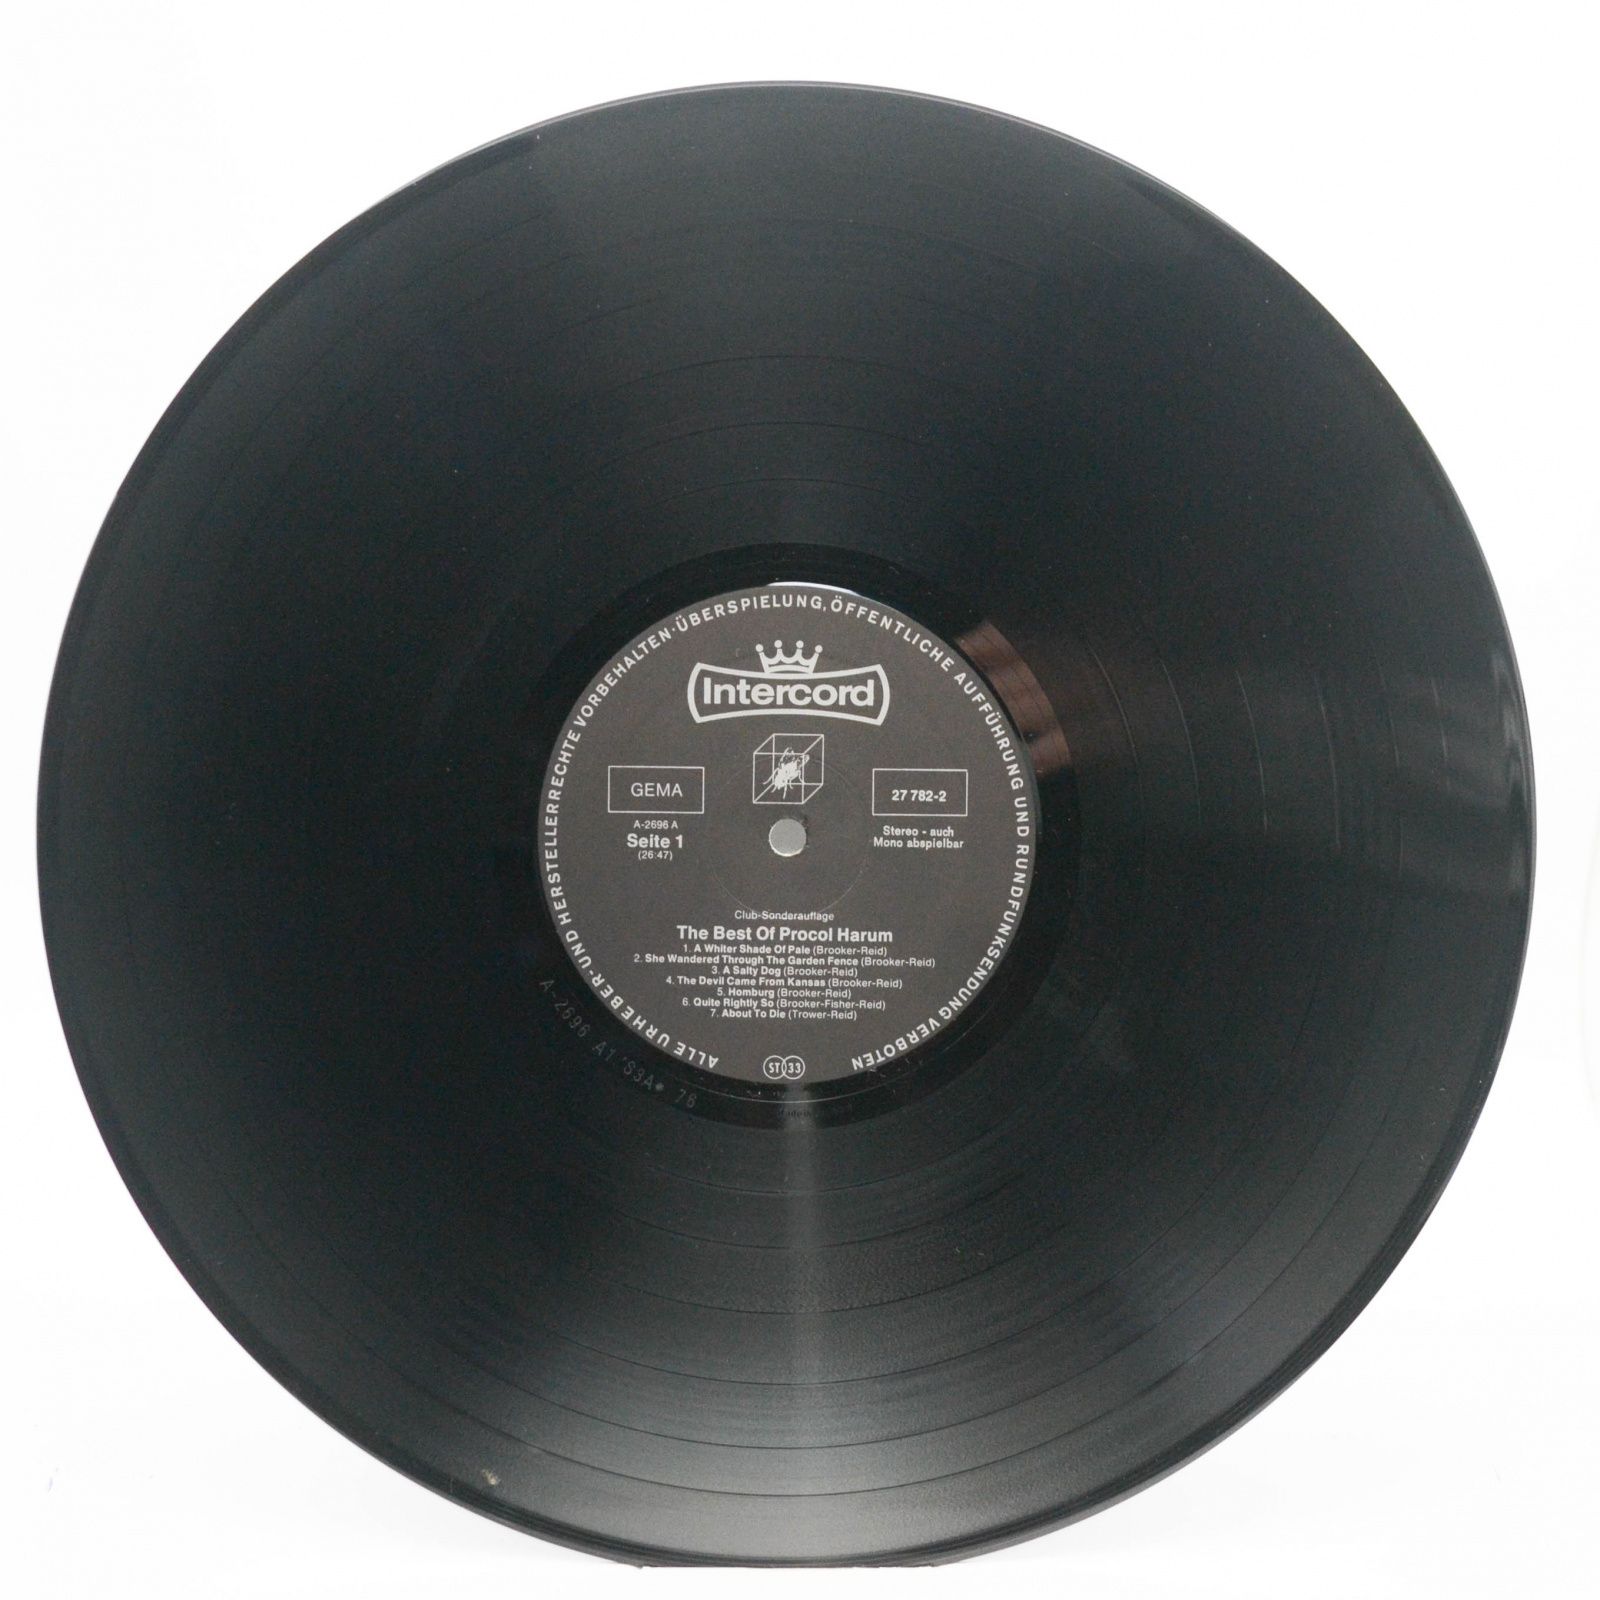 Procol Harum — The Best Of Procol Harum, 1976